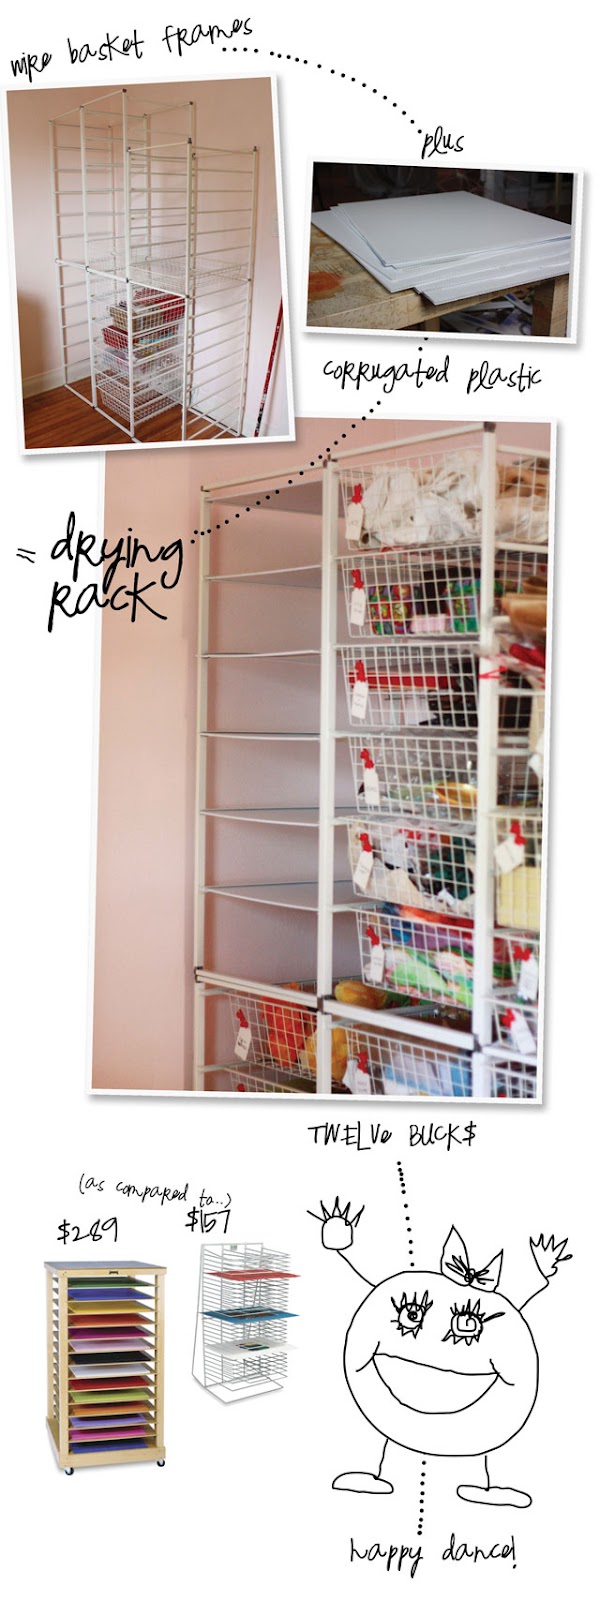 Make Your Own Art Drying Rack - Step By Step - Margaret White Art